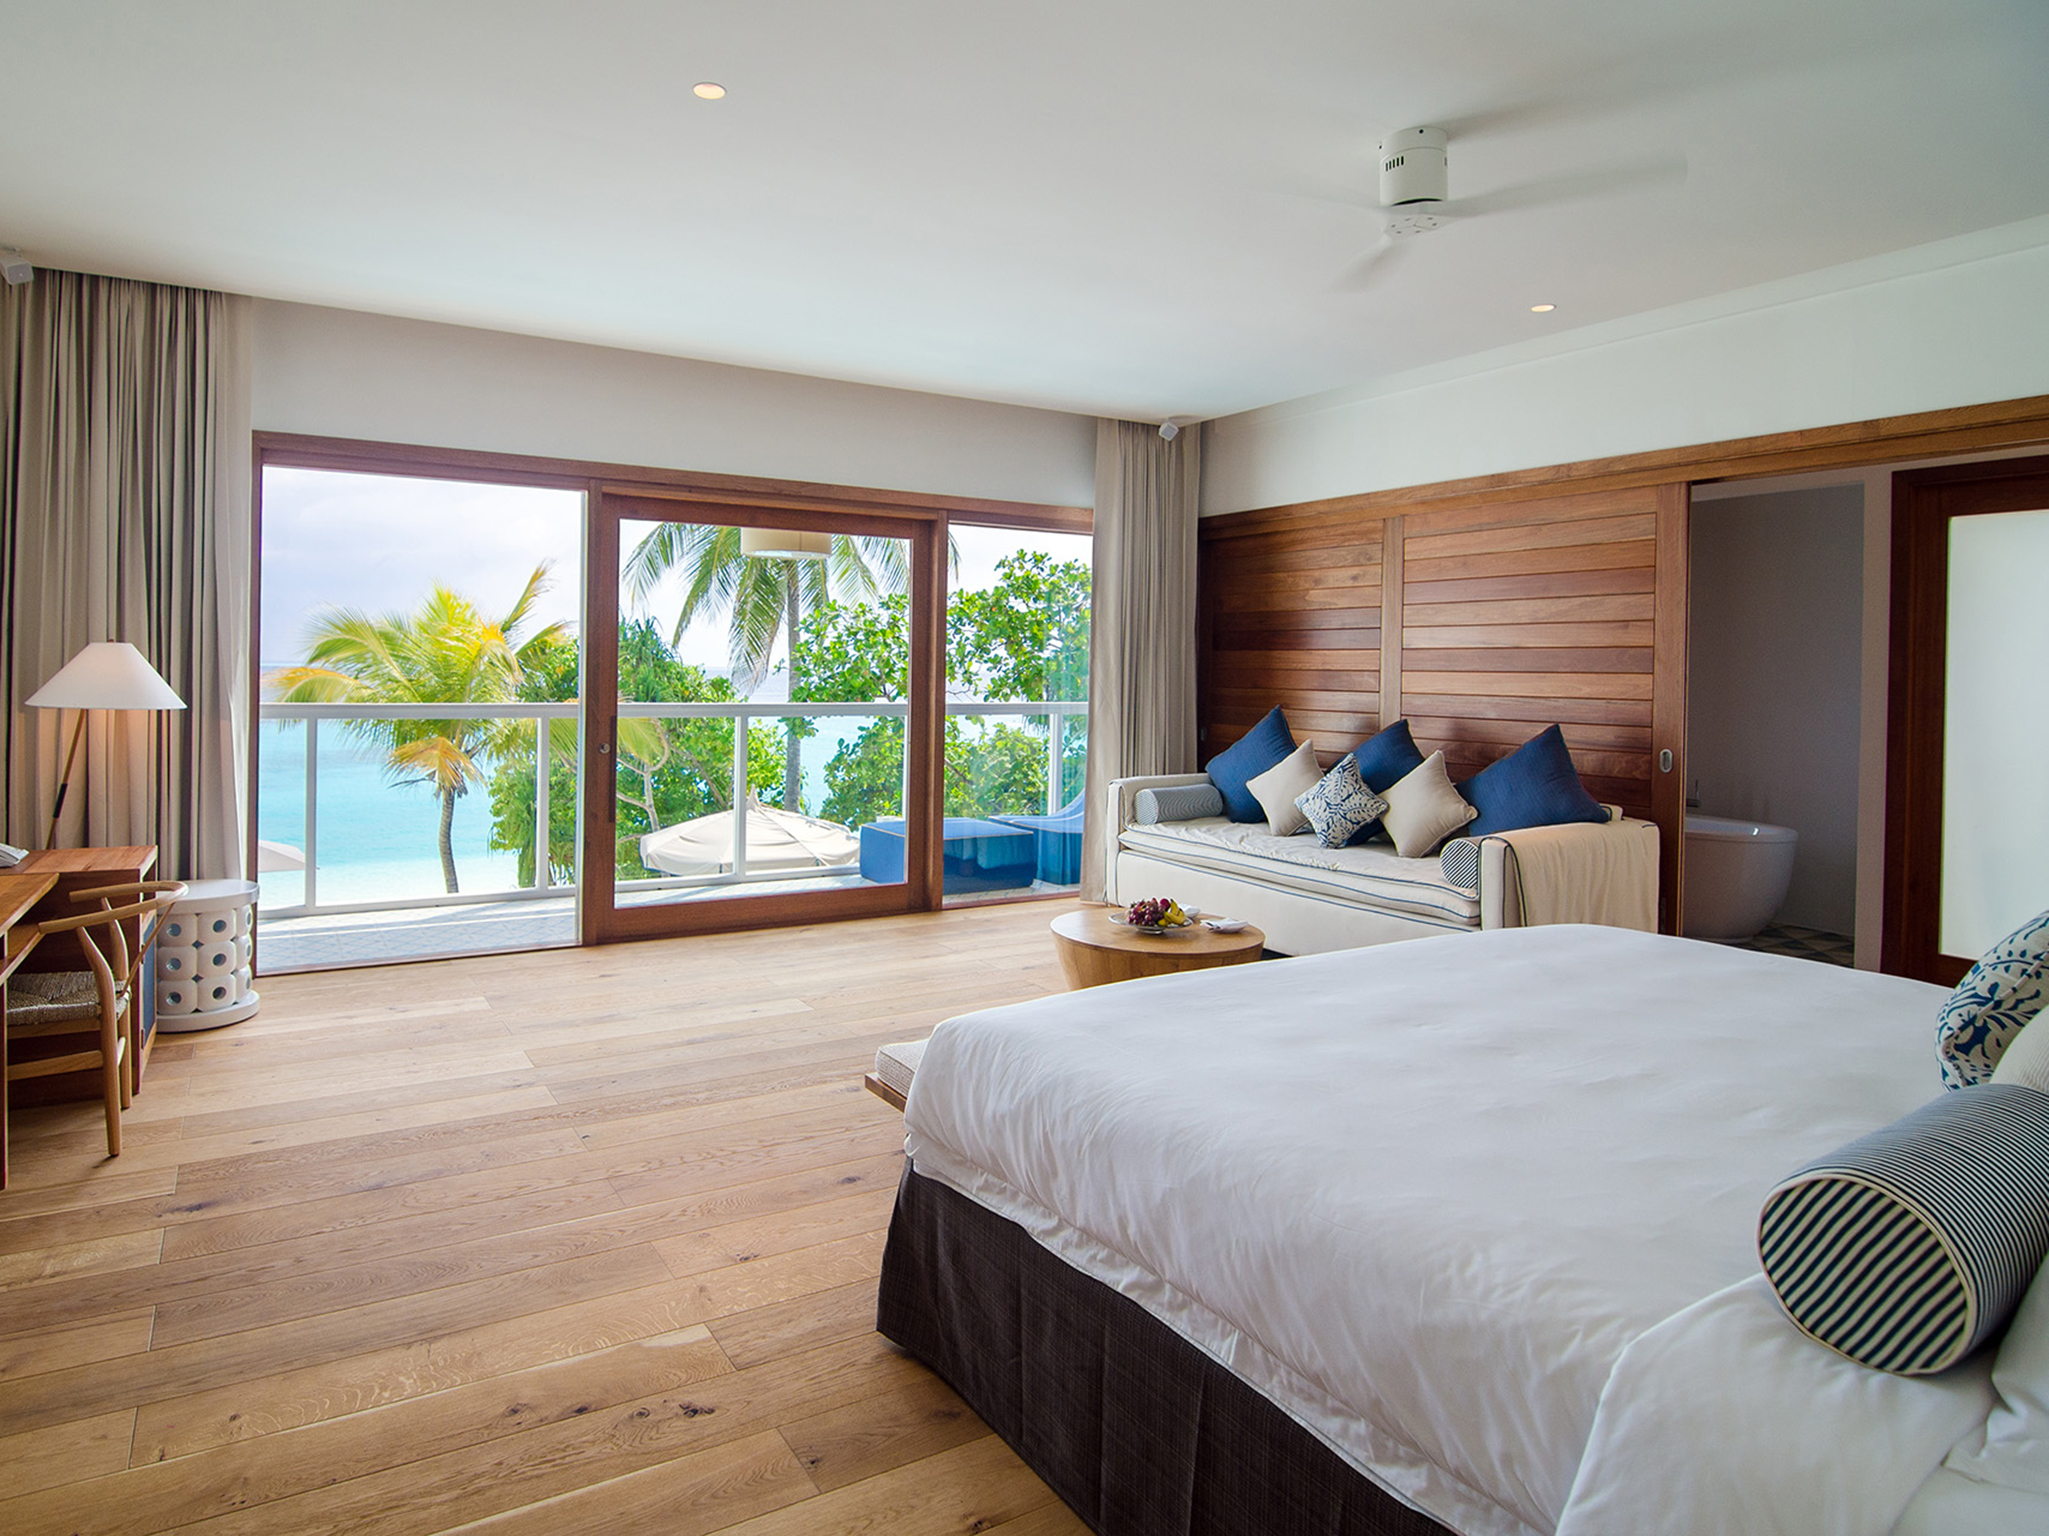 4 Bedroom Villa Residences - Guest bedroom luxury